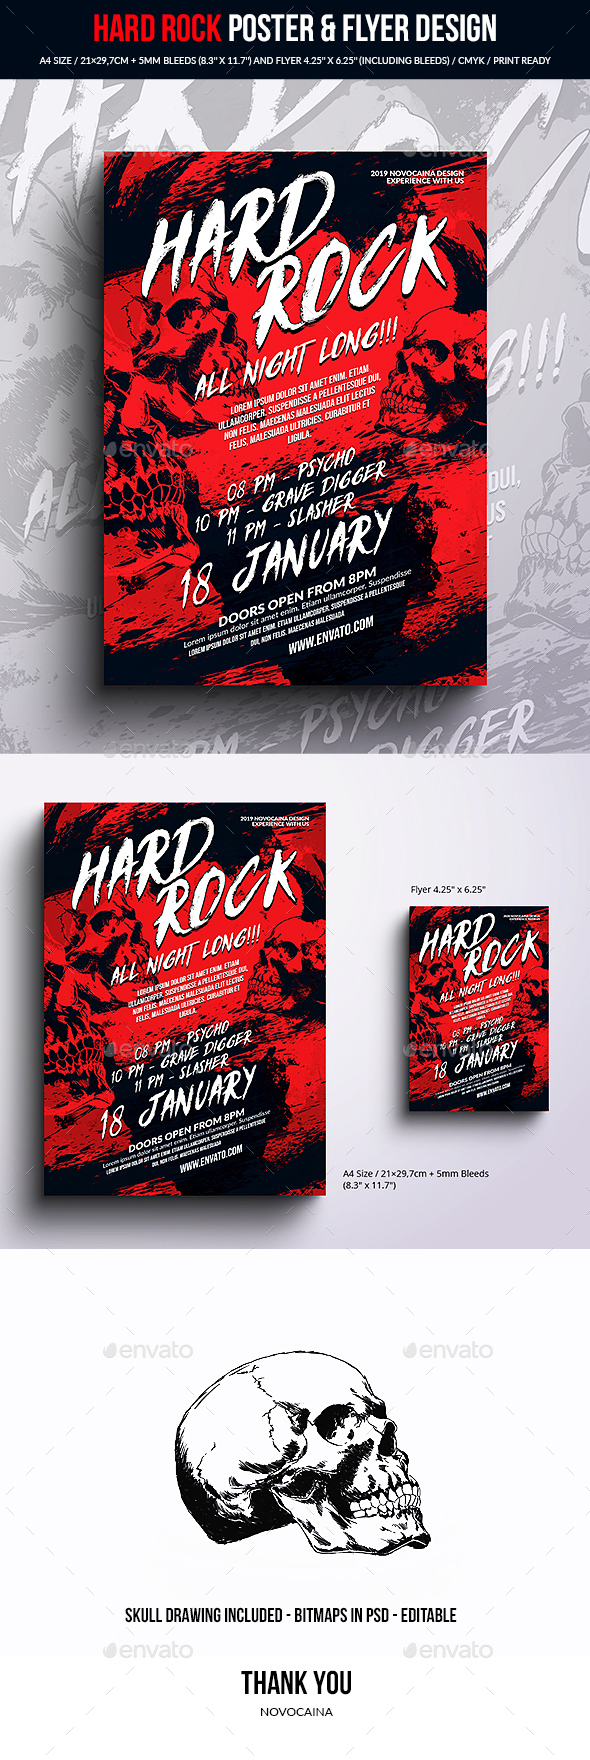 Hard Rock Party Poster & Flyer Design